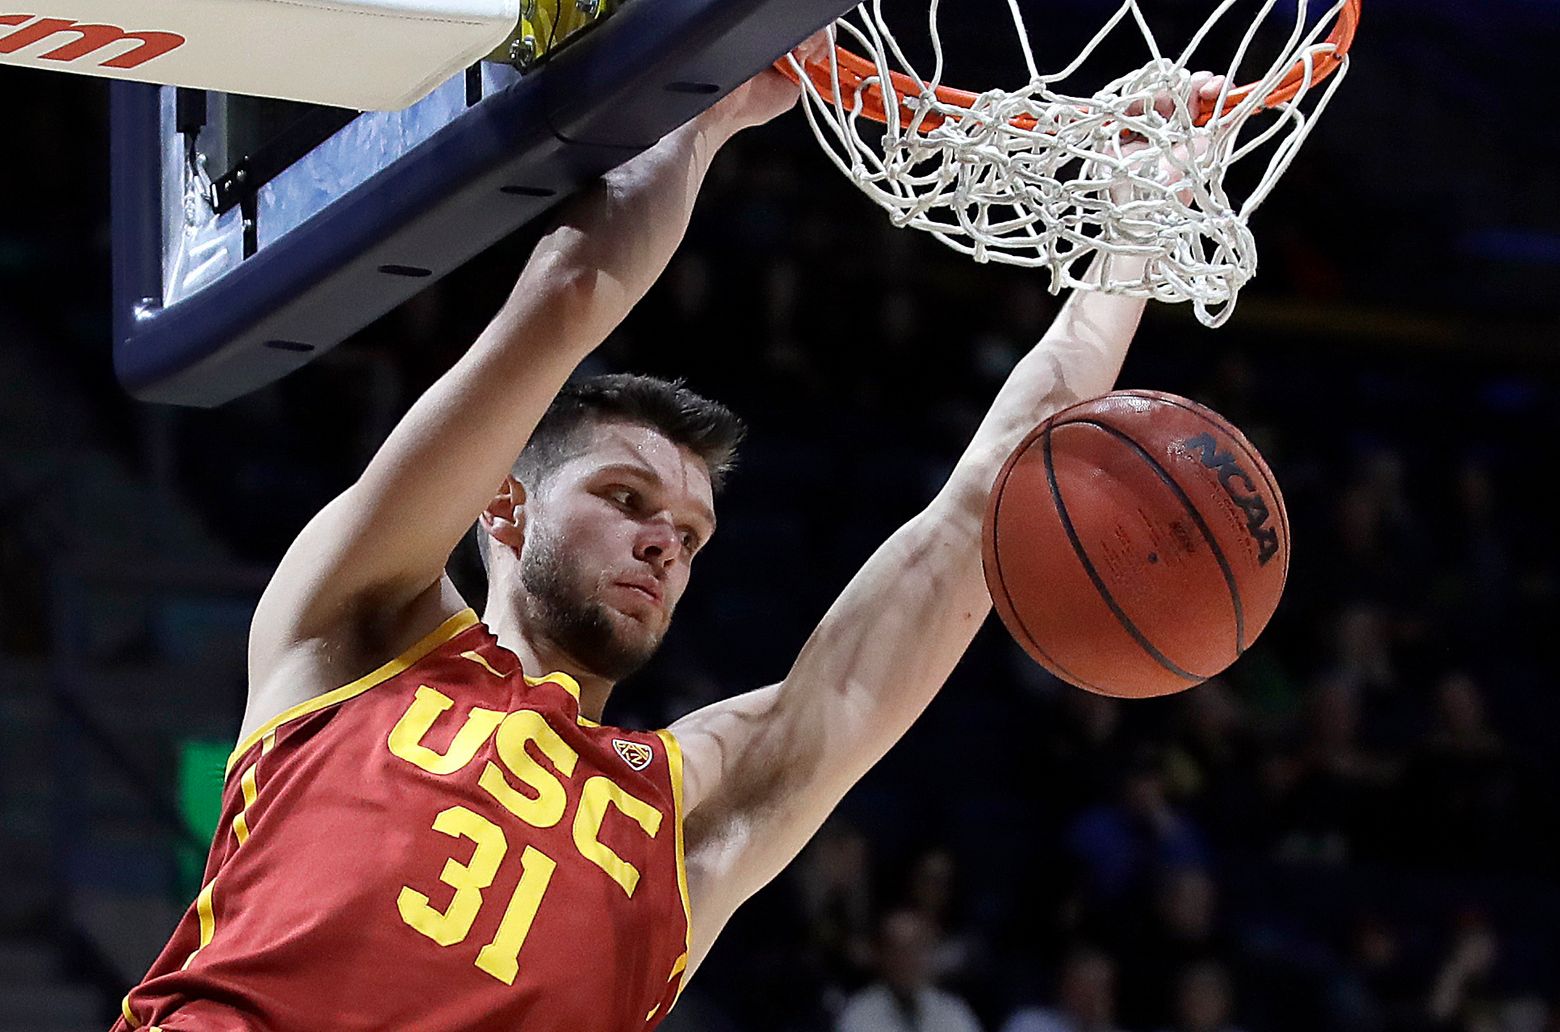 College basketball scandal updates: USC's De'Anthony Melton suspended 